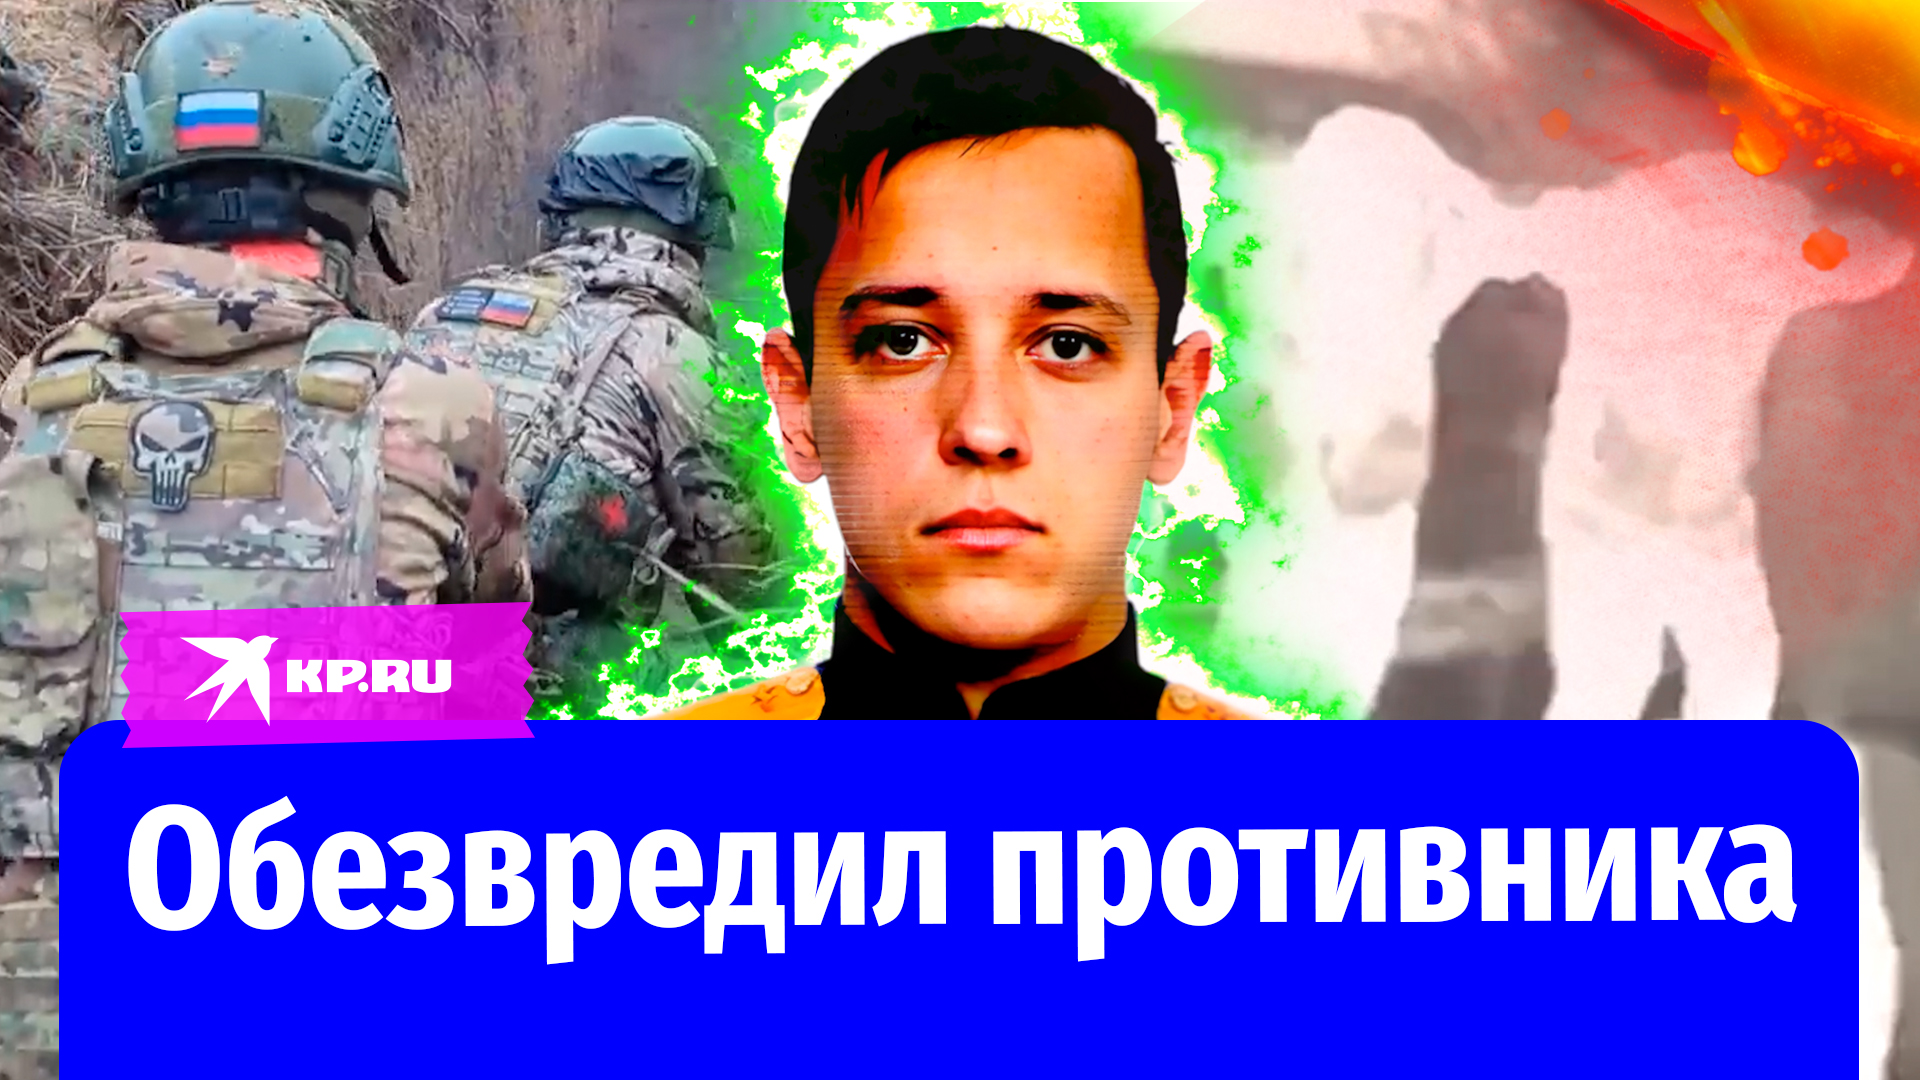 Прапорщик Антон Богомолов обезвредил противника на подходе к позиции